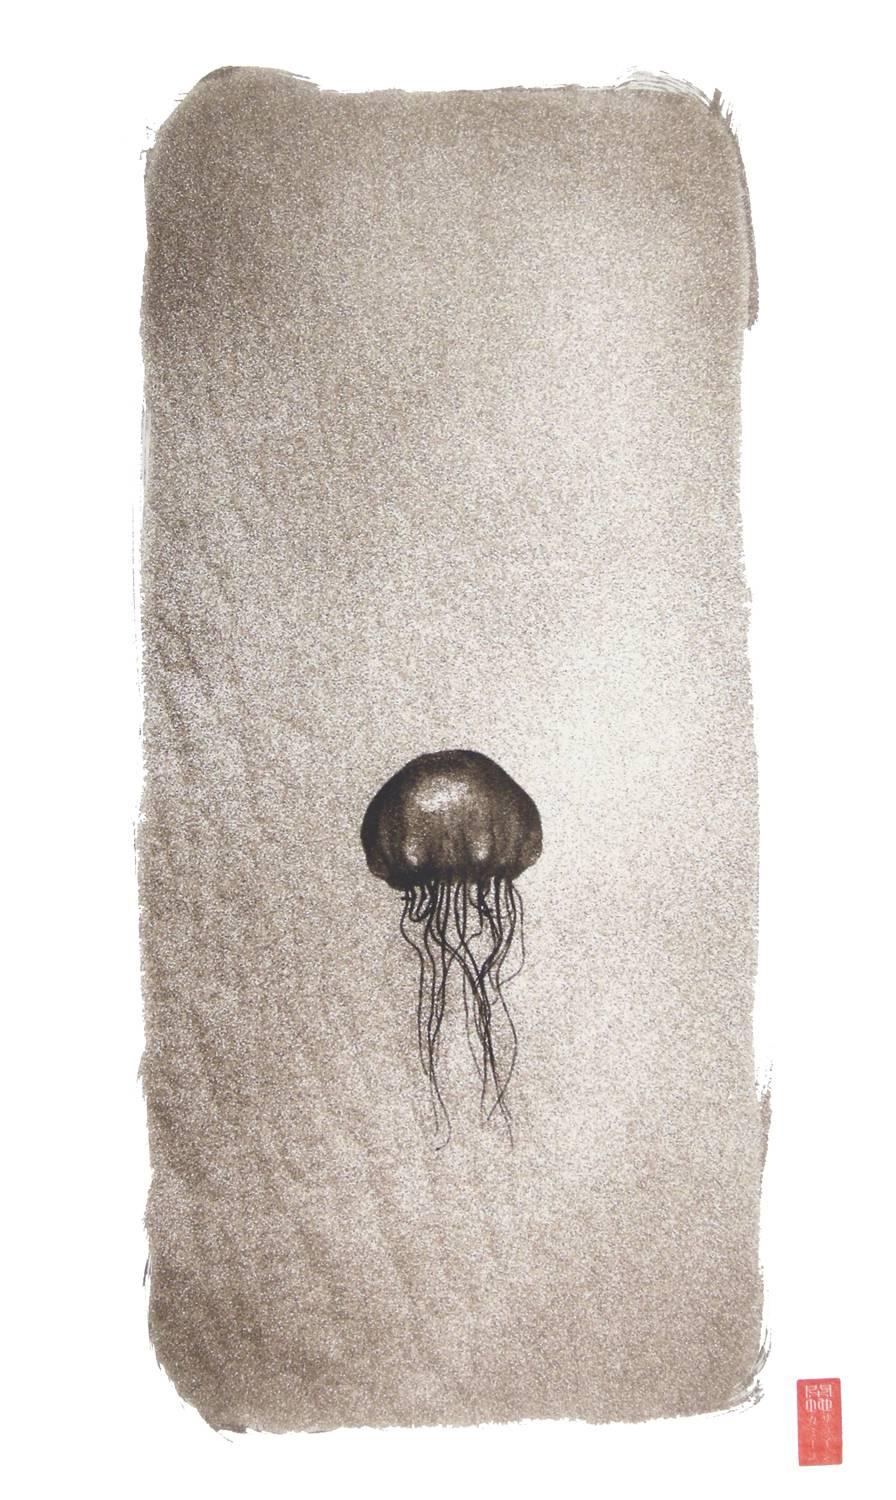 Ryuijie Black and White Photograph - Kanchi "K-49" Jellyfish